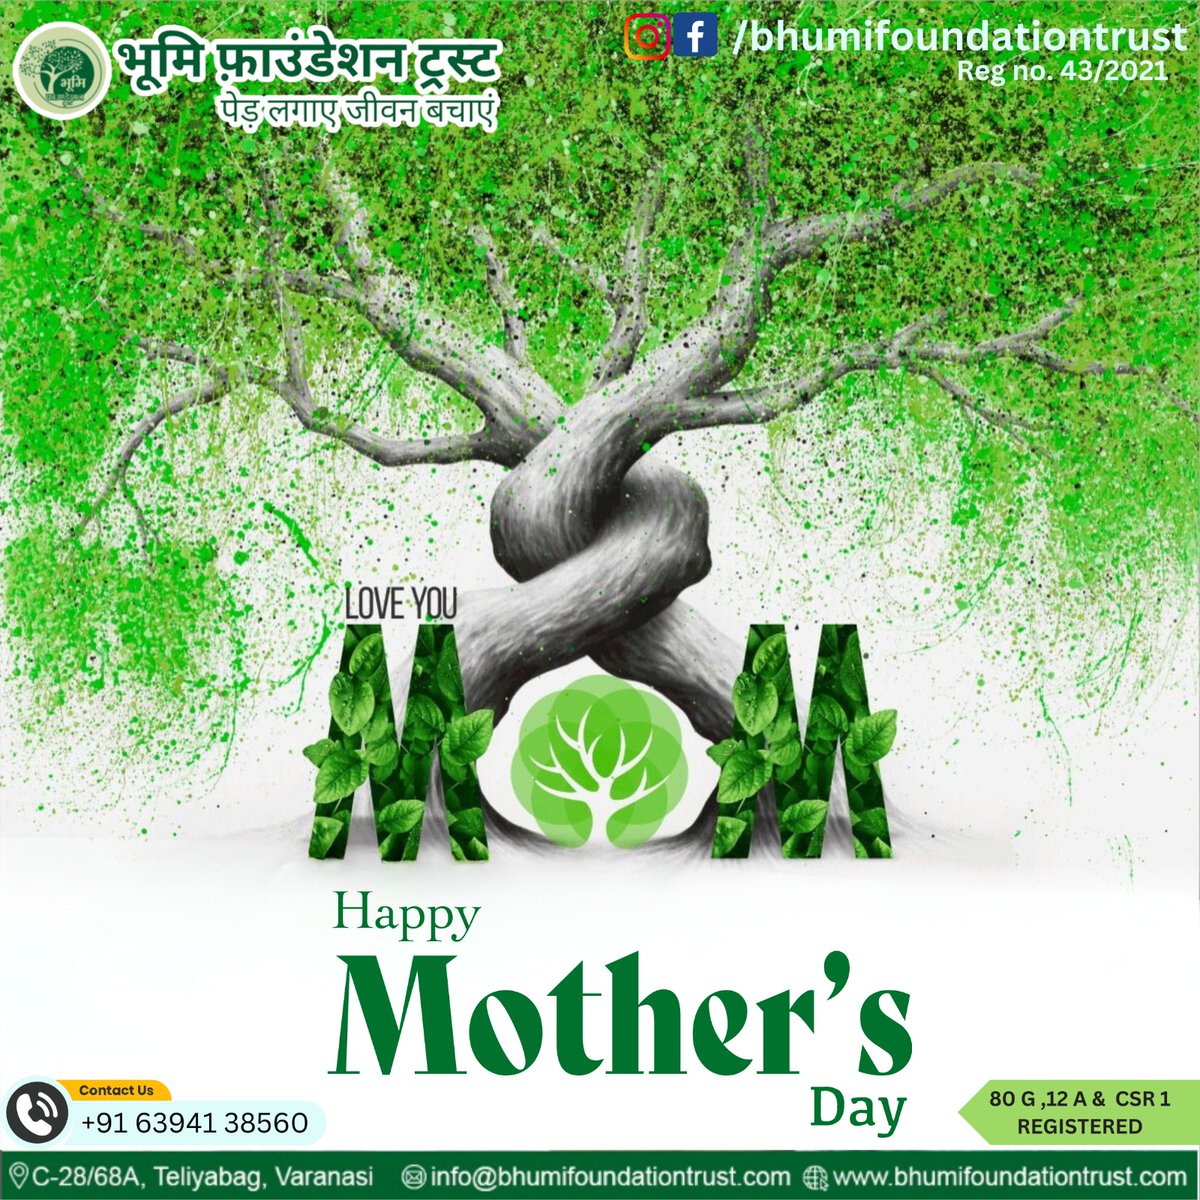 तुम मेरी सबसे अच्छी दोस्त, मेरी गुरु, मेरी रक्षक हो
इसलिए आप हमेशा हमारे दिल के पास रहती हो।
Happy Mother's Day!

#mothers #happybirthday #mama #flowers #instagood #mum #mama #flowers #instagood #mum #like #mothersdaygifts #beautiful #stayhome #instagram #mothersdaygiftideas…